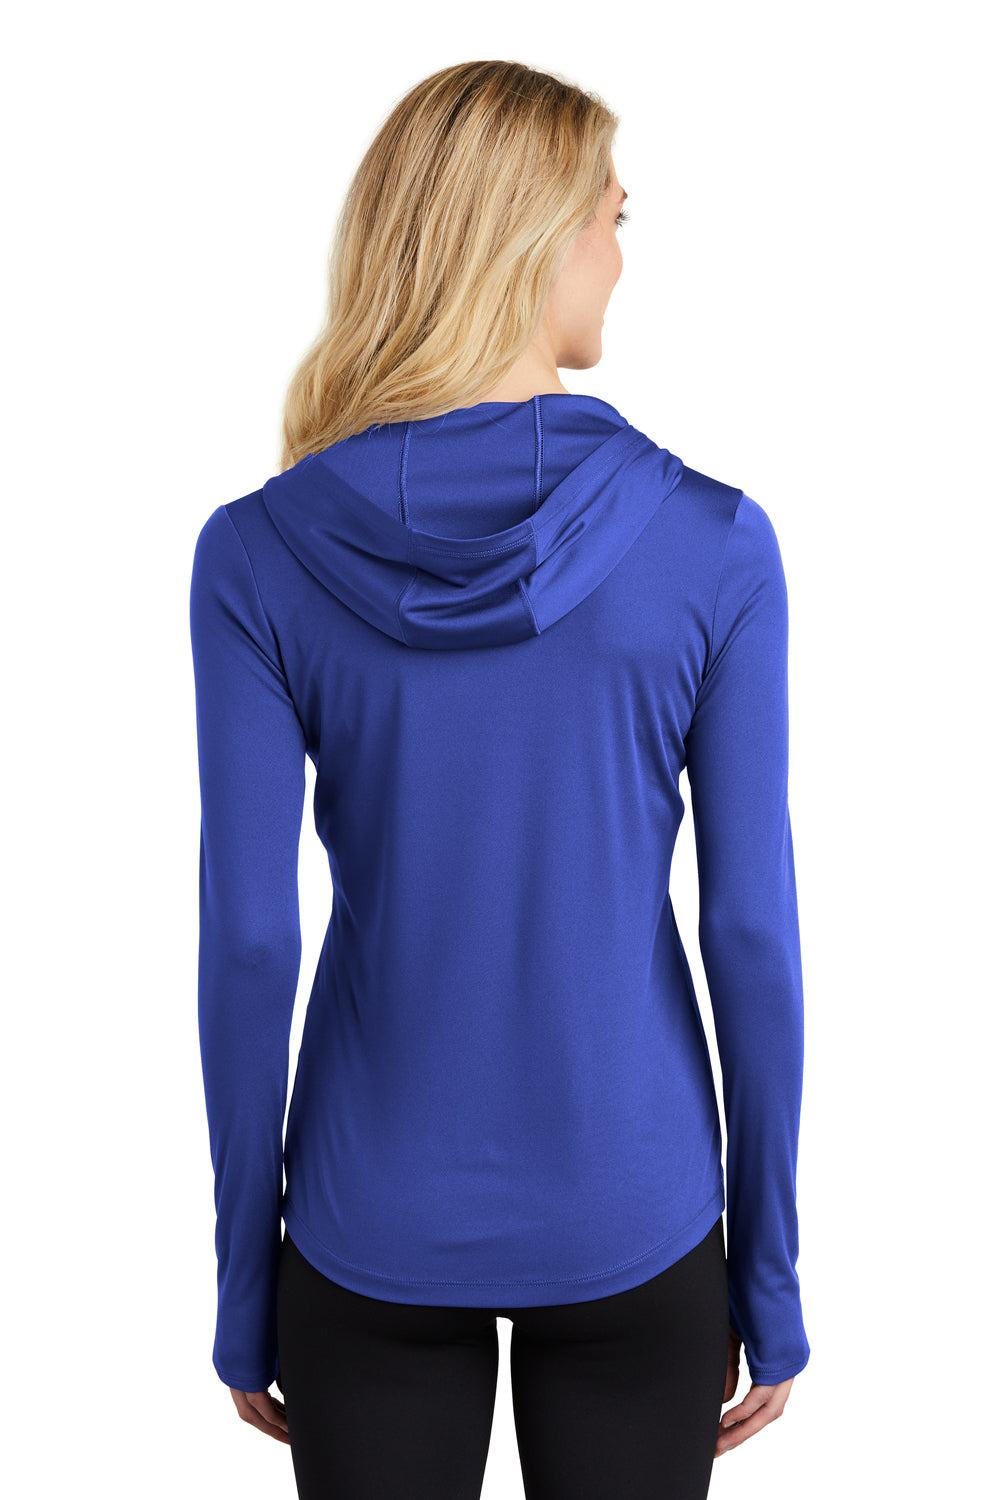 Sport-Tek LST358 Womens Competitor Moisture Wicking Long Sleeve Hooded T-Shirt Hoodie Royal Blue Back